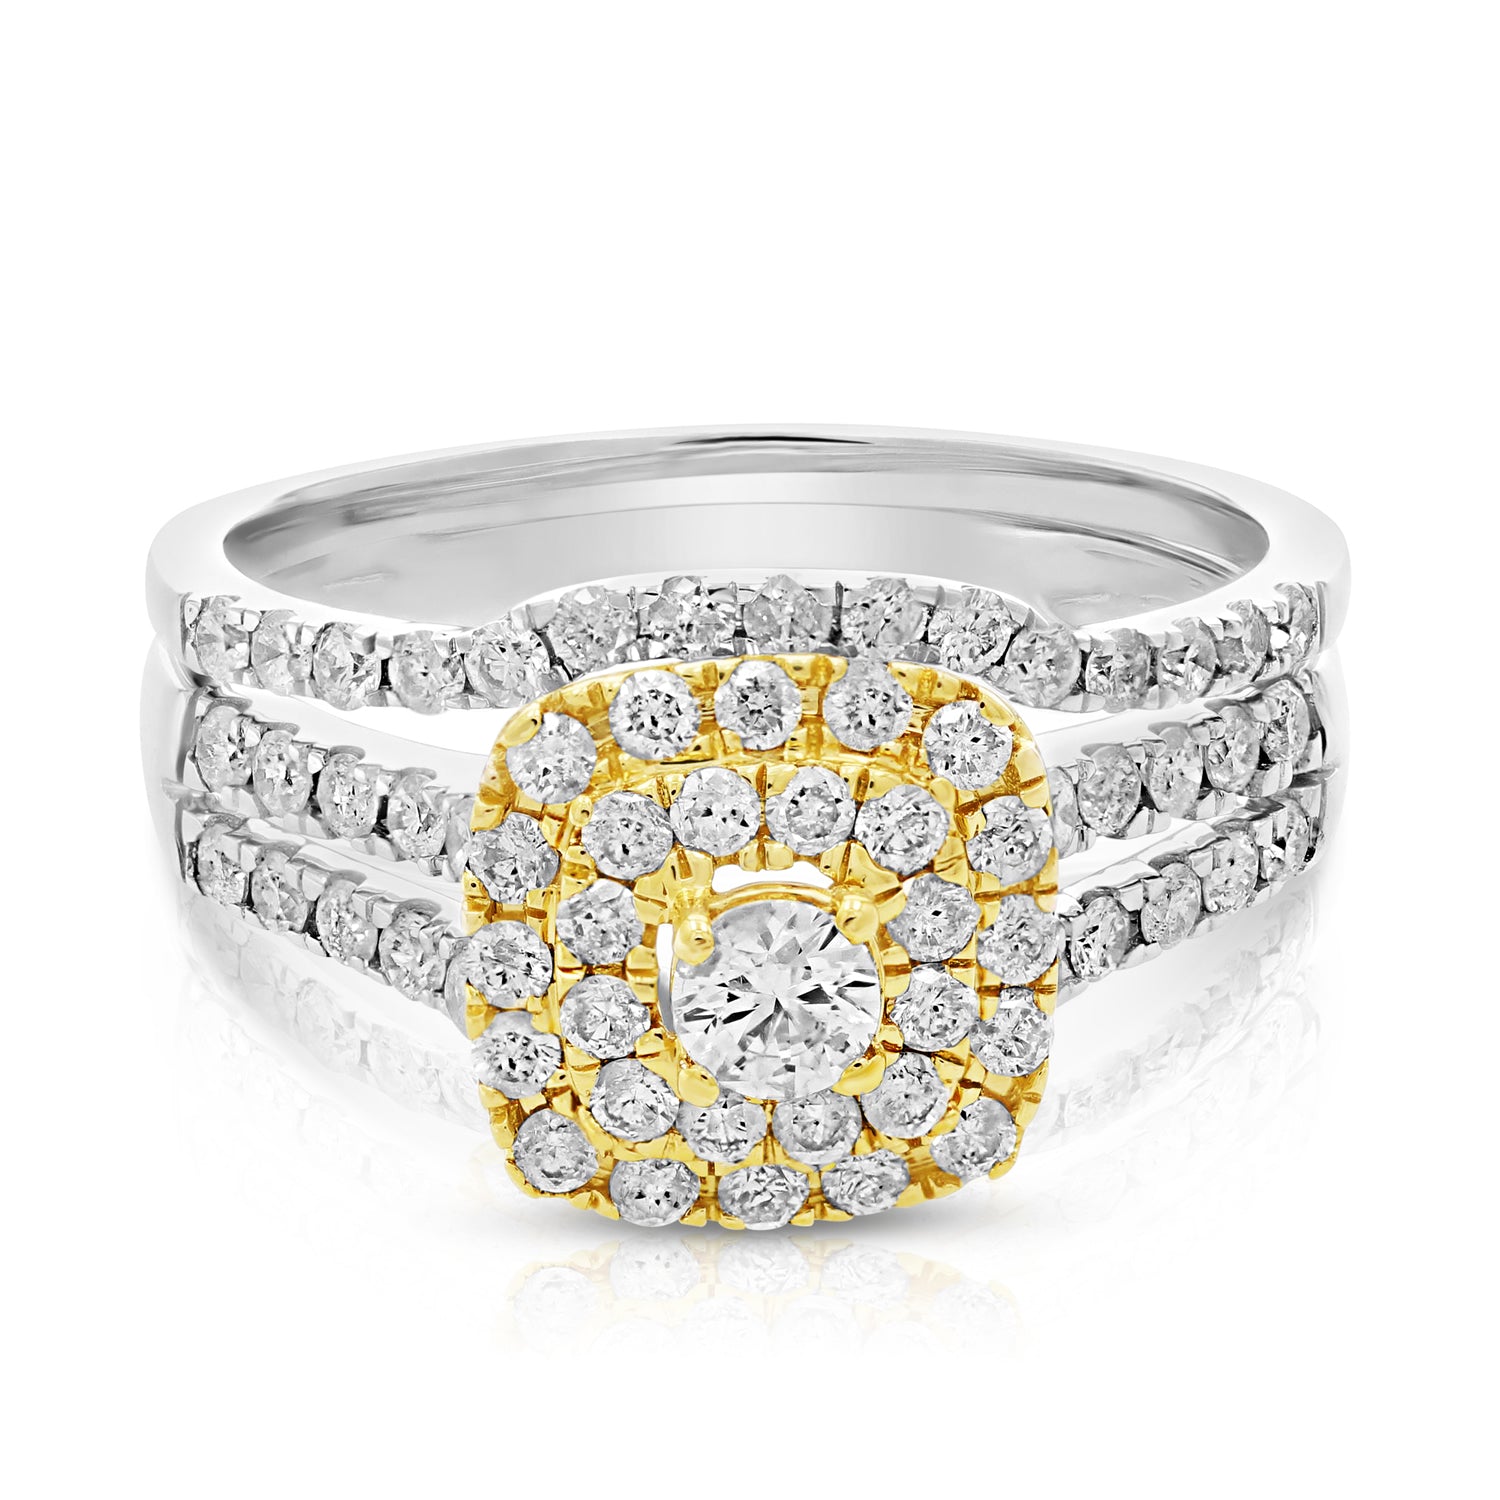 1 cttw Diamond Wedding Bridal Ring Set 14K Two Tone Gold Cushion Halo Engagement